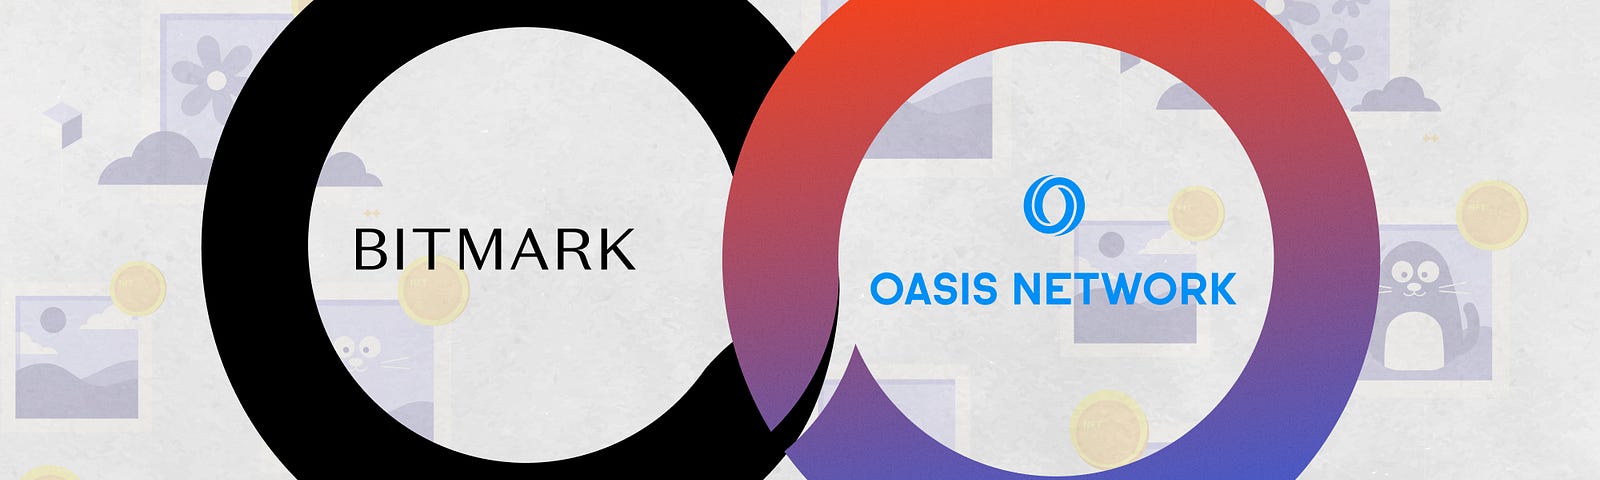 Bitmark partners with Oasis